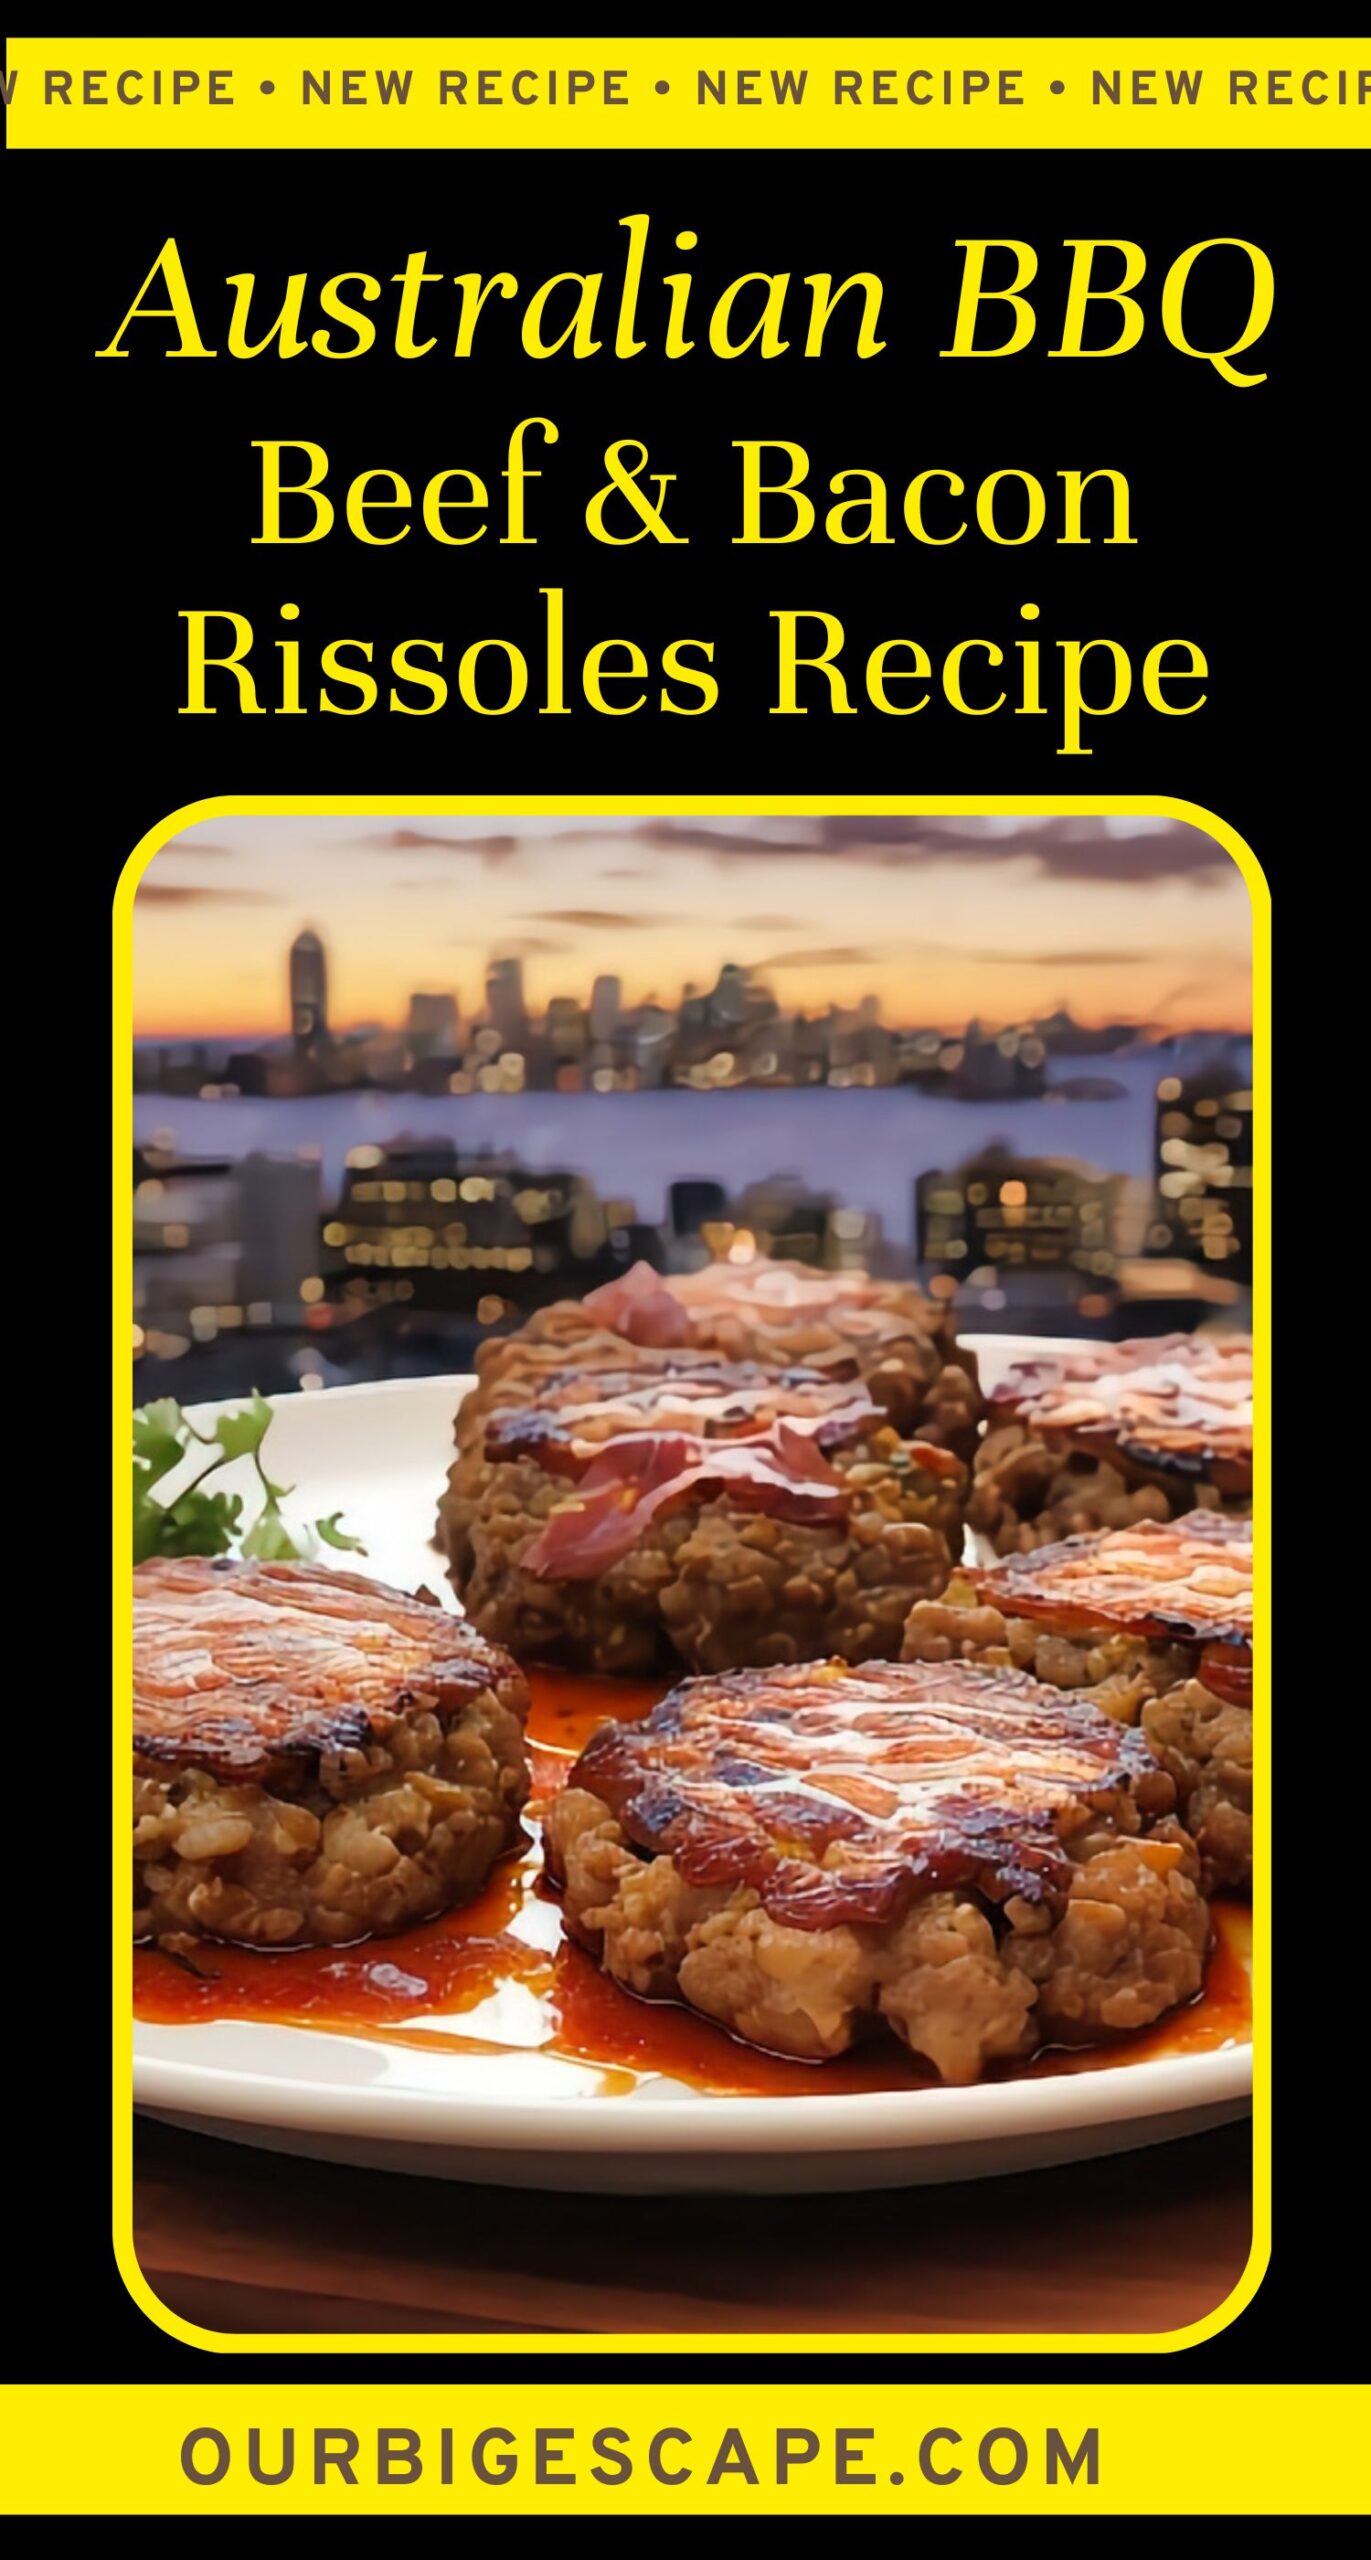 2. Australian BBQ Beef and Bacon Rissoles Recipe